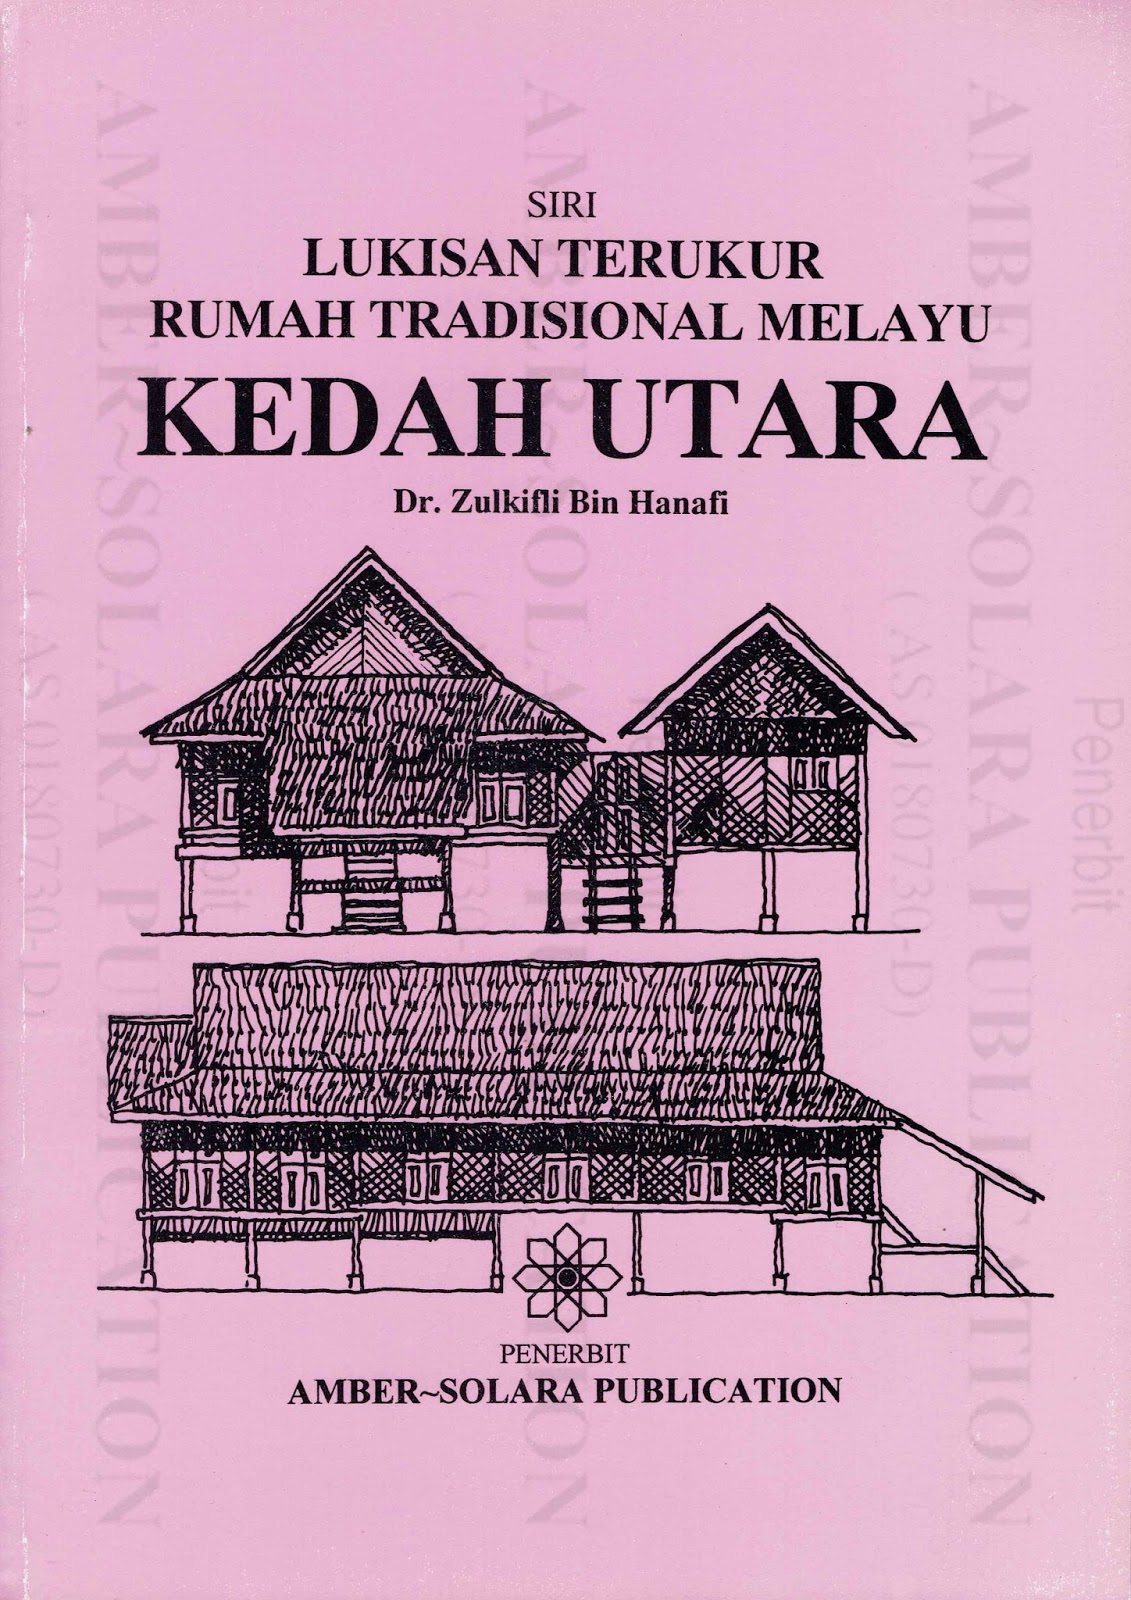 Siri Lukisan Terukur Rumah Tradisional Melayu Kedah Utara